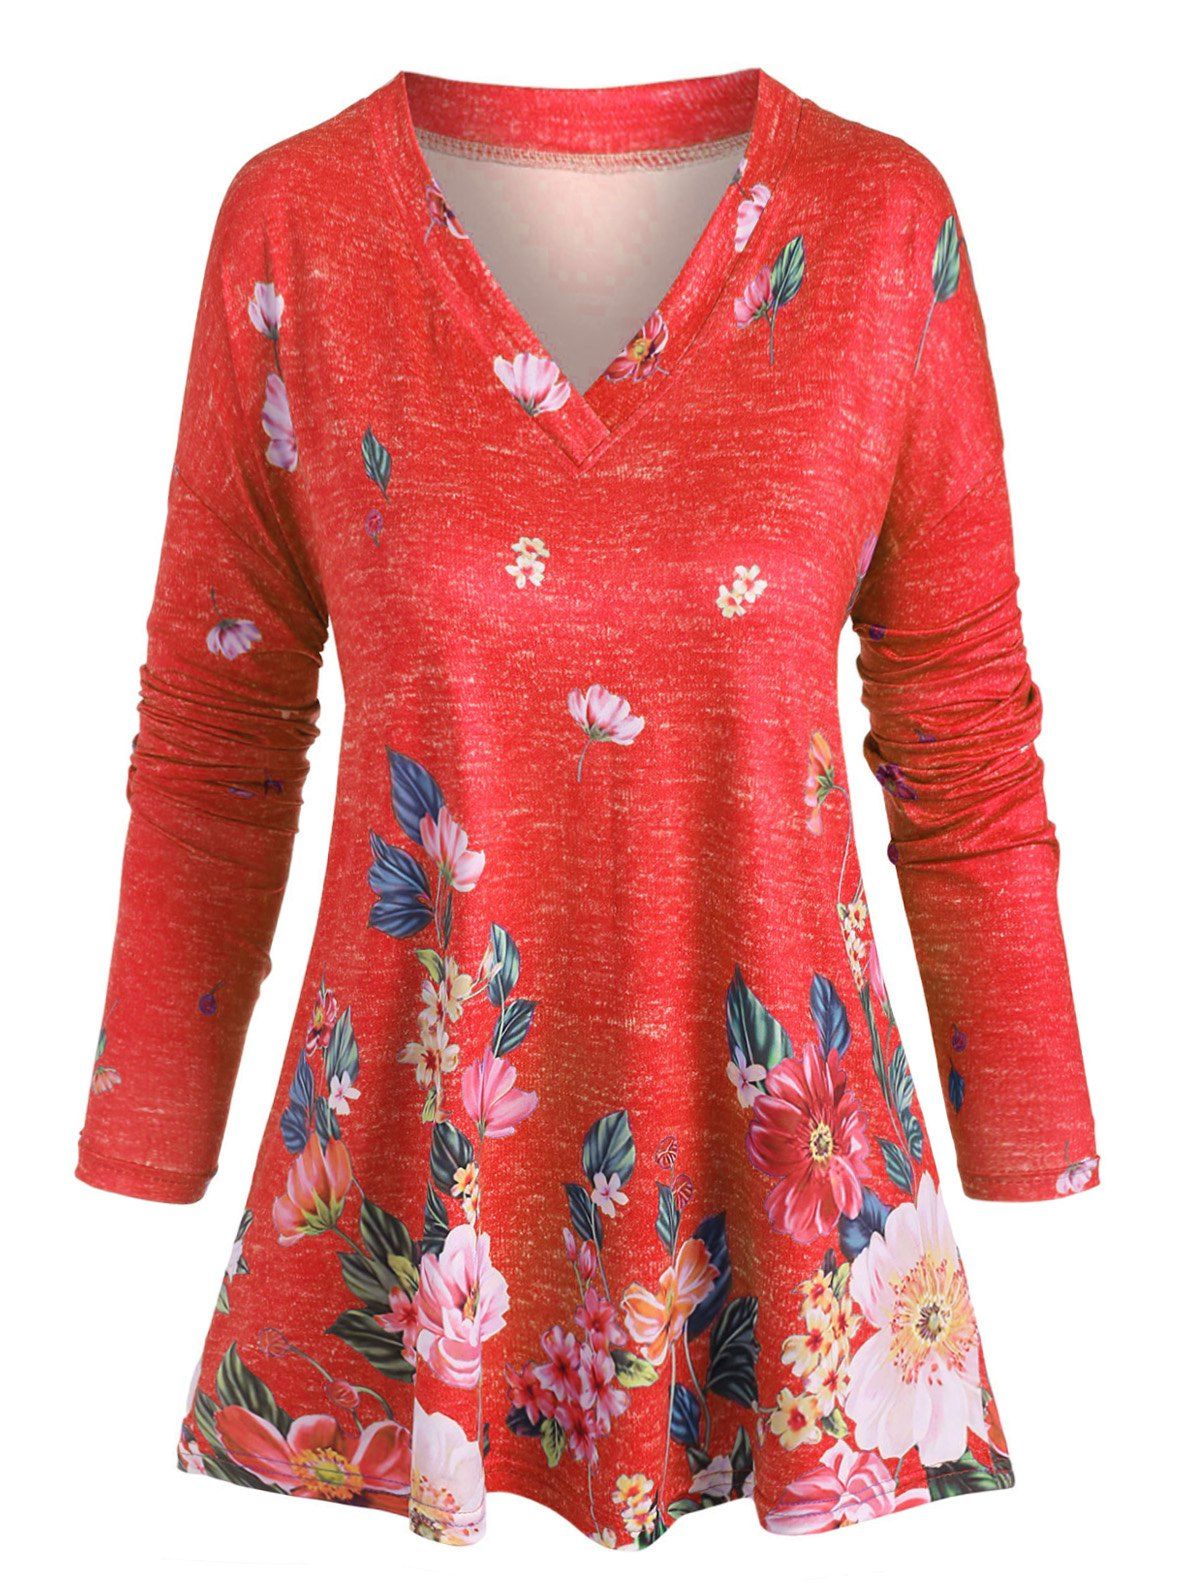 Plus Size Floral Print V Neck T Shirt - RED XL